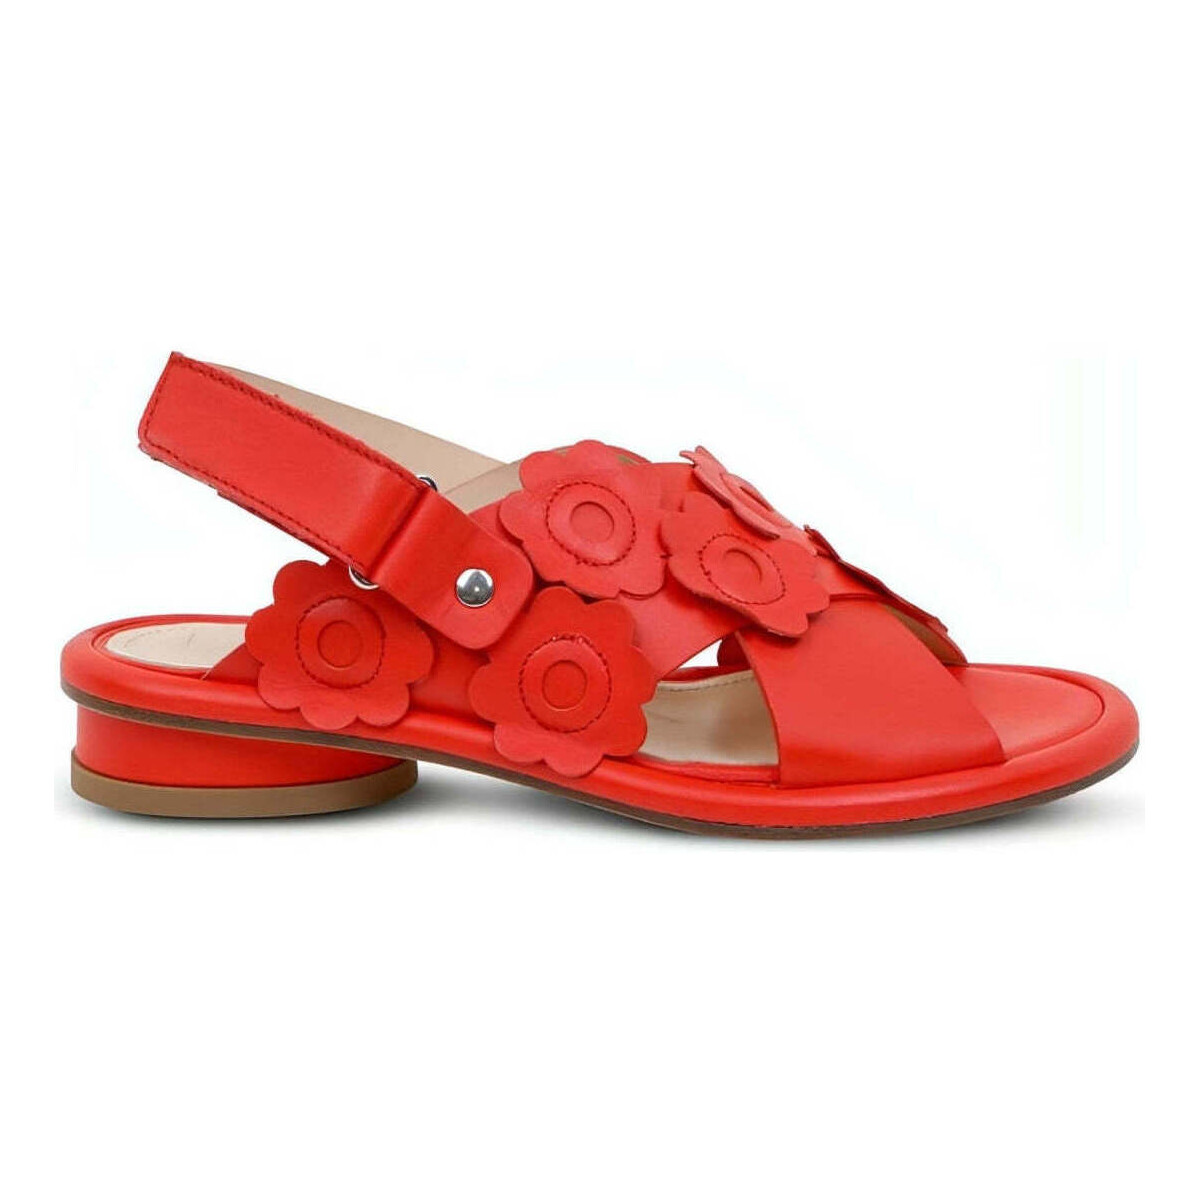 Schuhe Damen Sportliche Sandalen Agl  Rot